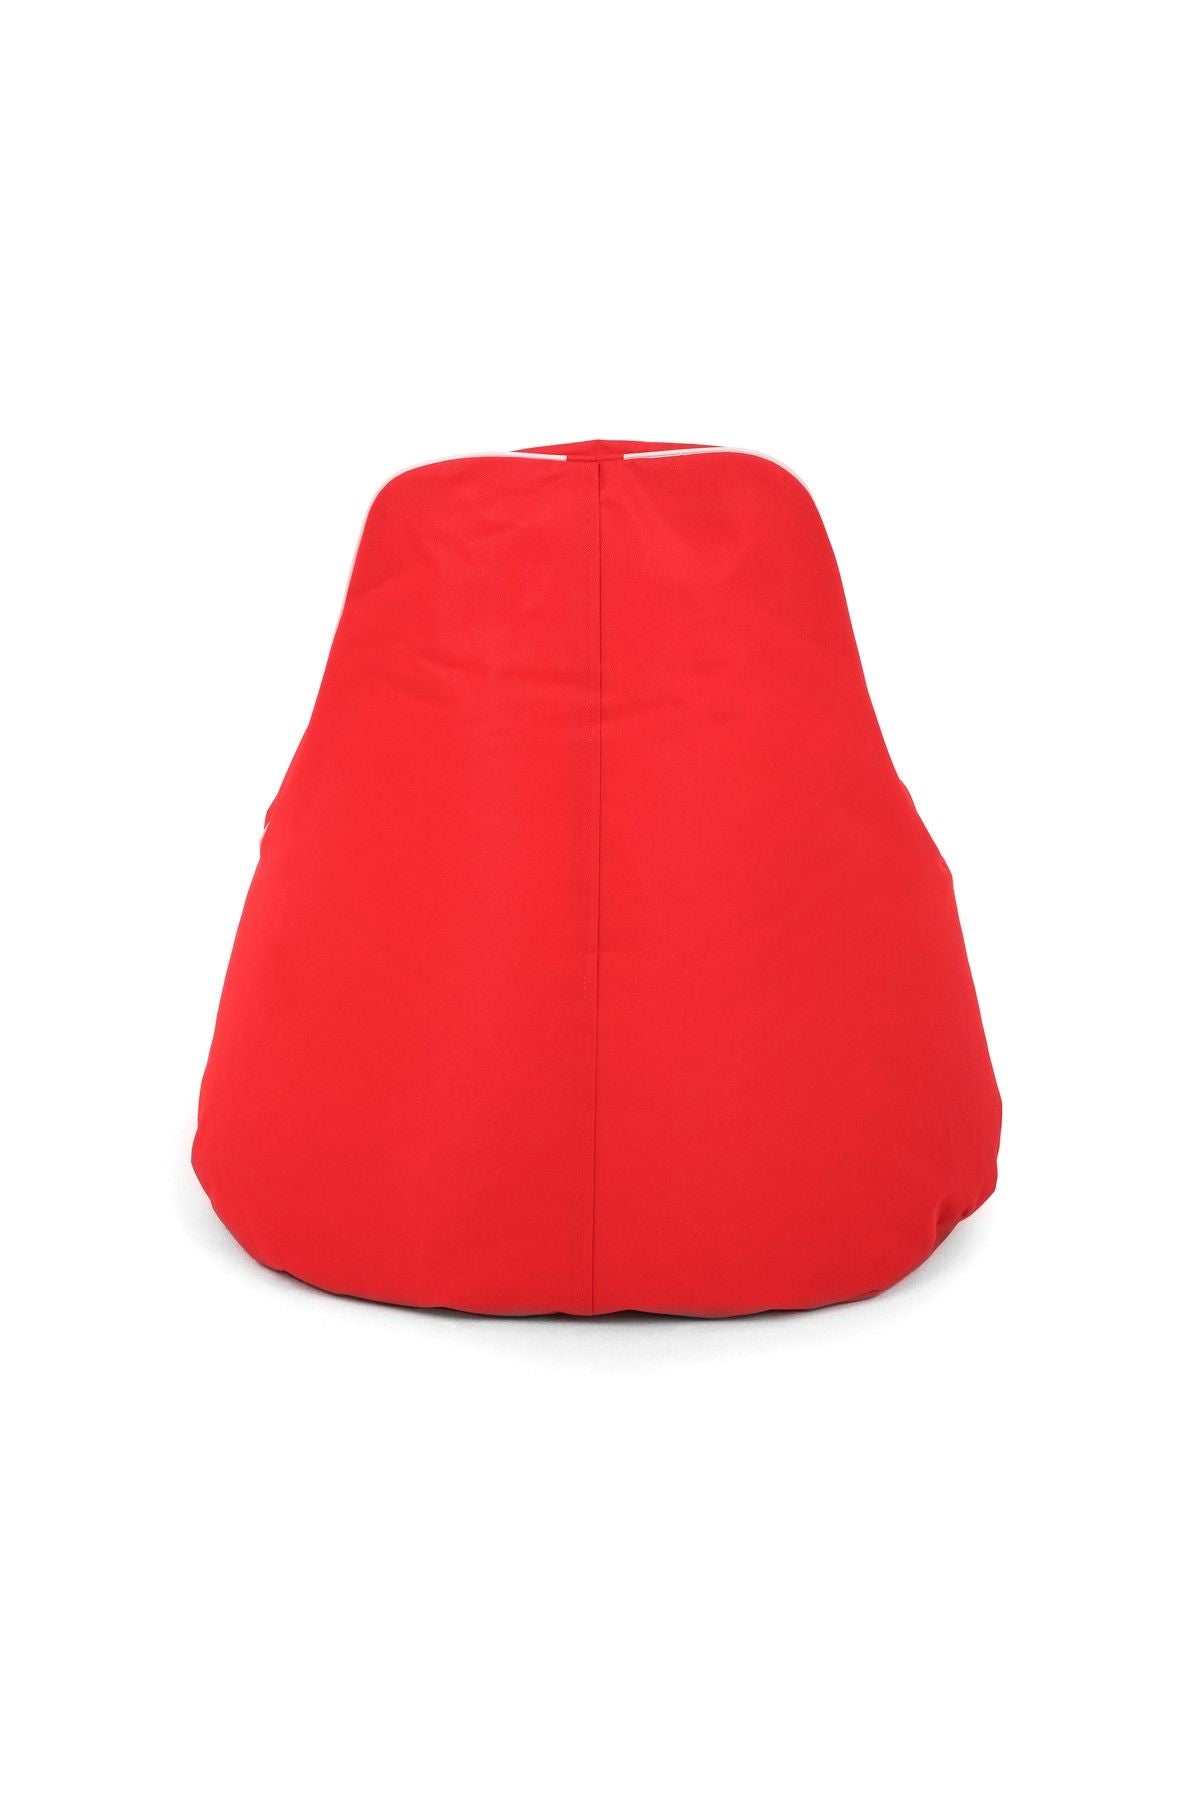 Golf - Red - Bean Bag